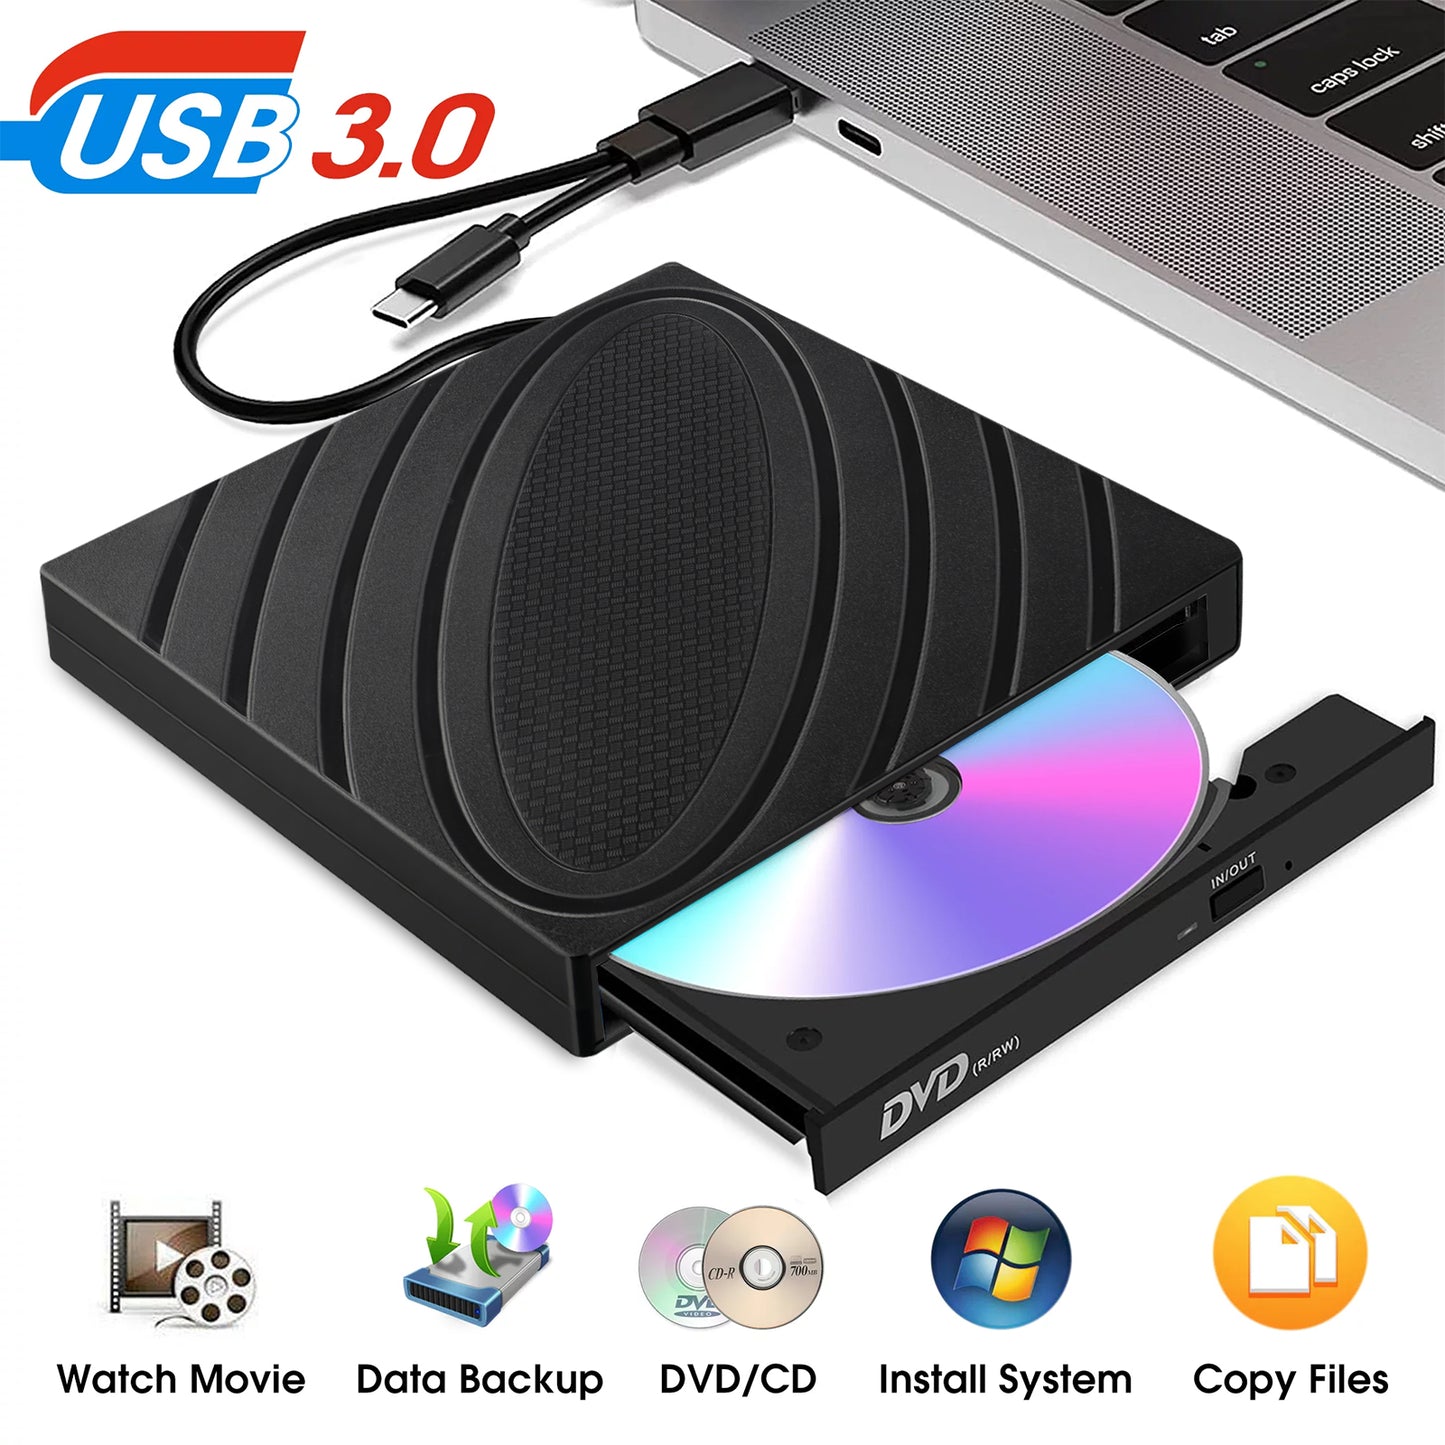 External USB 3.0 DVD RW CD Writer Drive Burner Reader Player For Laptop PC